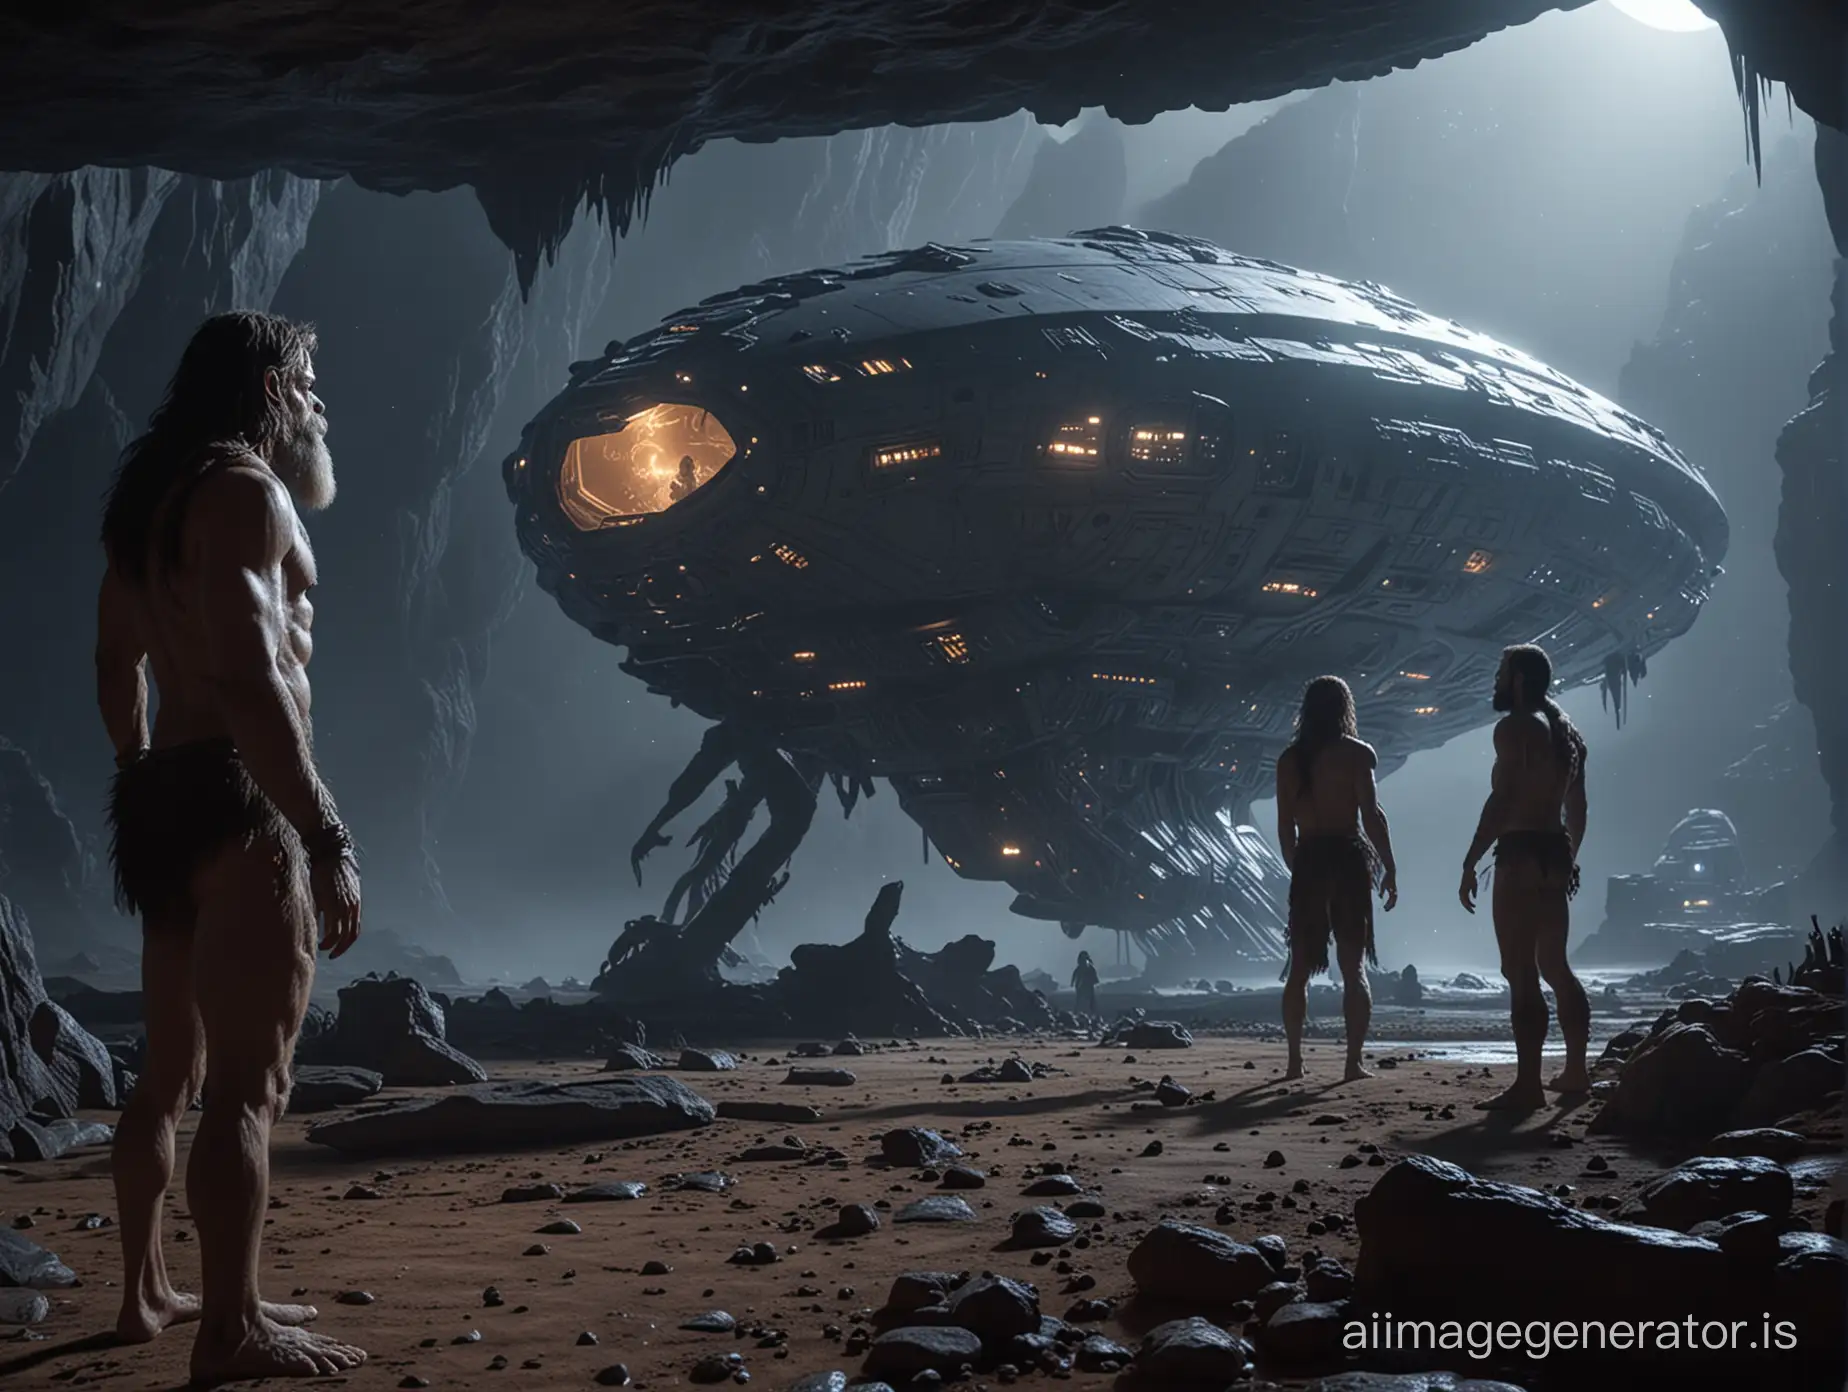 Cavemen-Encountering-Alien-Spaceship-in-Photorealistic-Cinematic-Scene